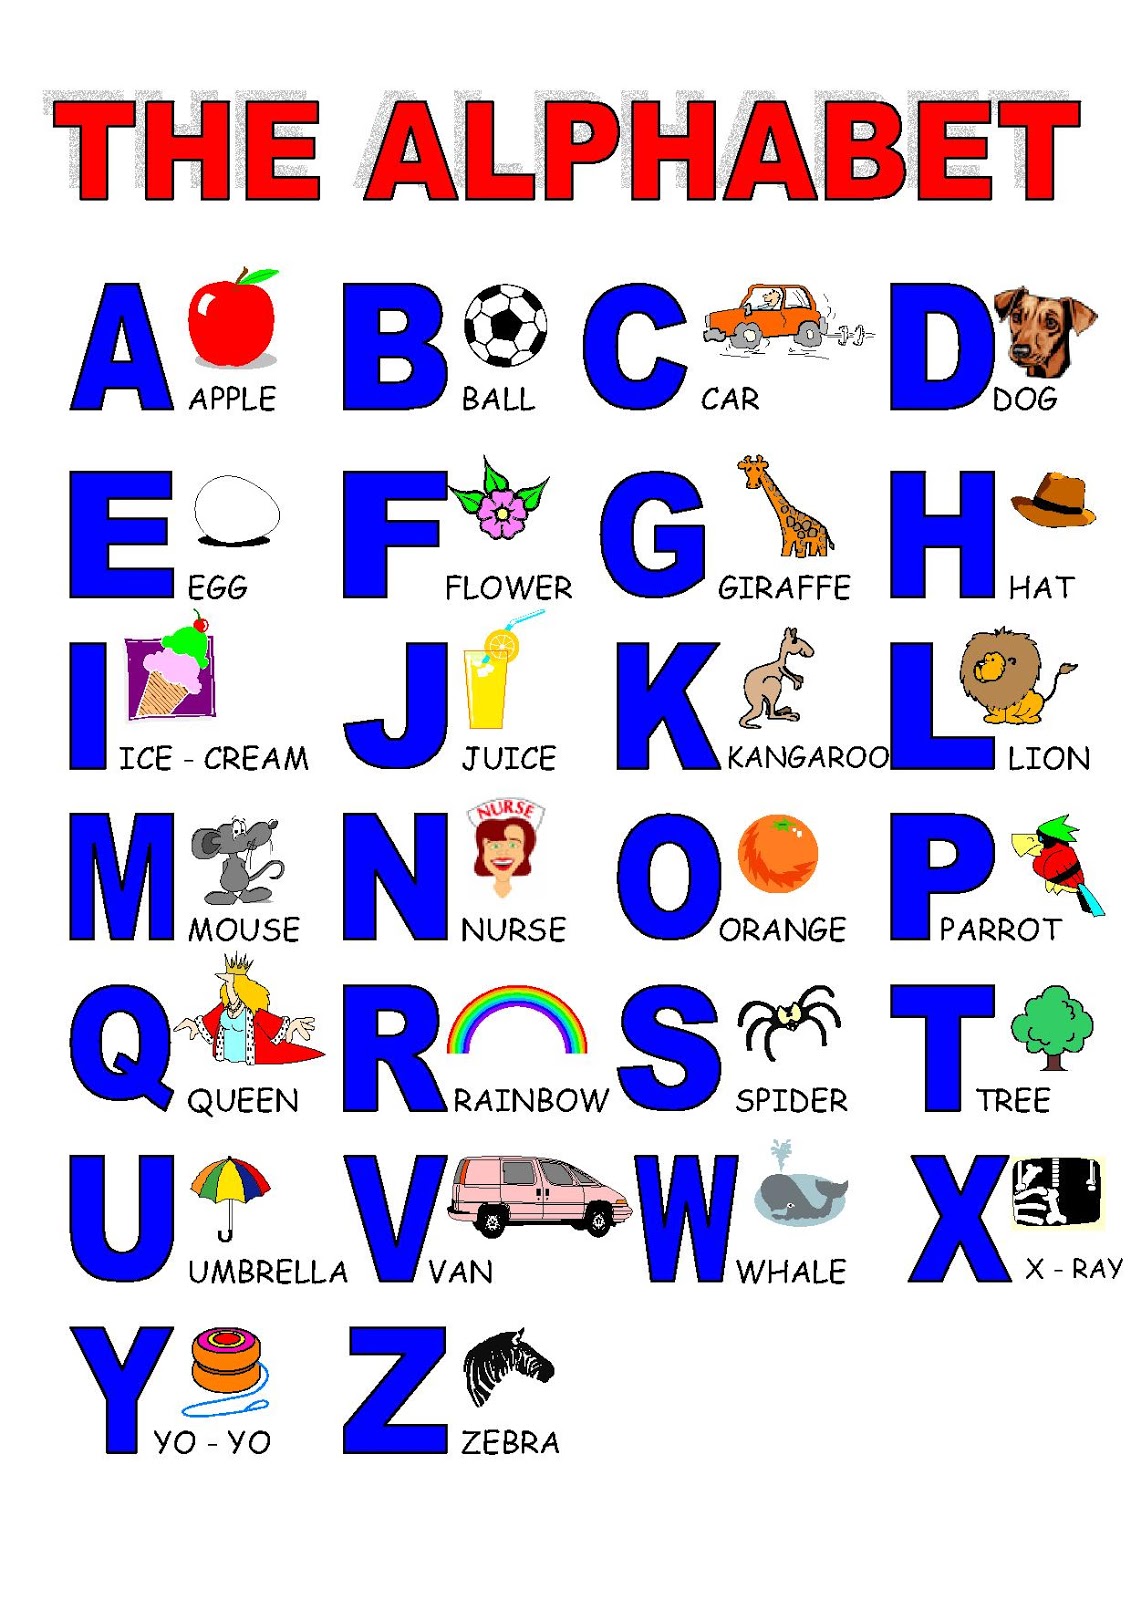 Yummy English for Children: Alphabet activities!!!